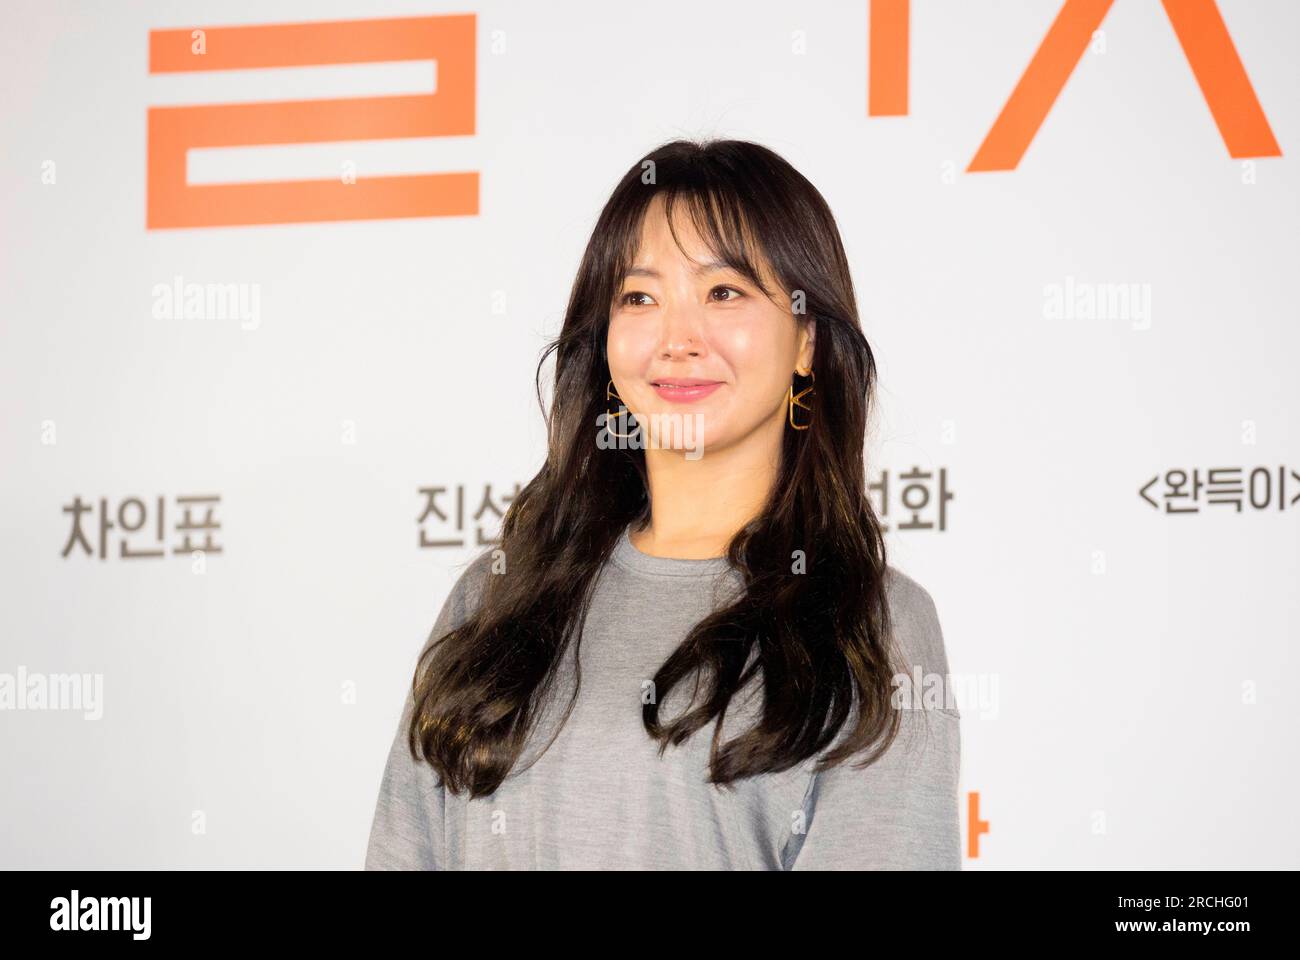 FILA taps South Korean actress Han So-Hee as global brand